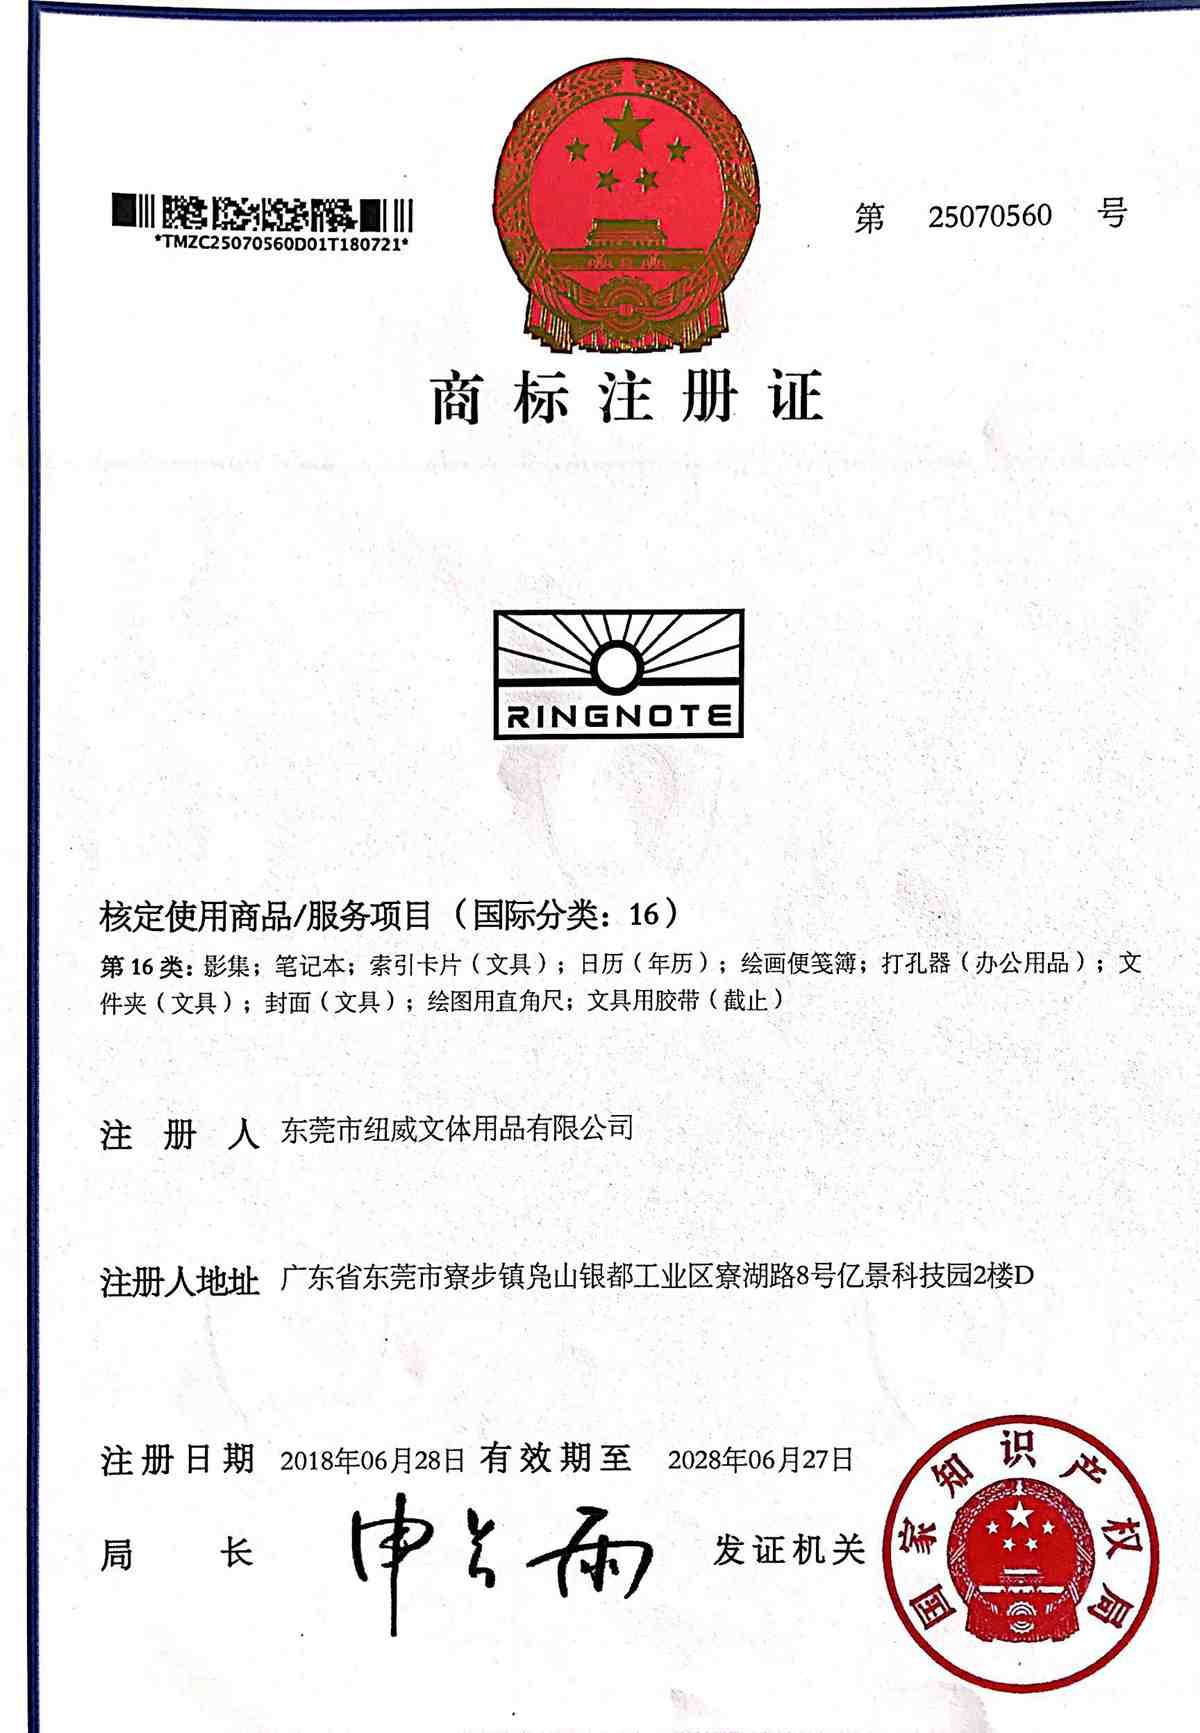 Trademark Registration Certificate3